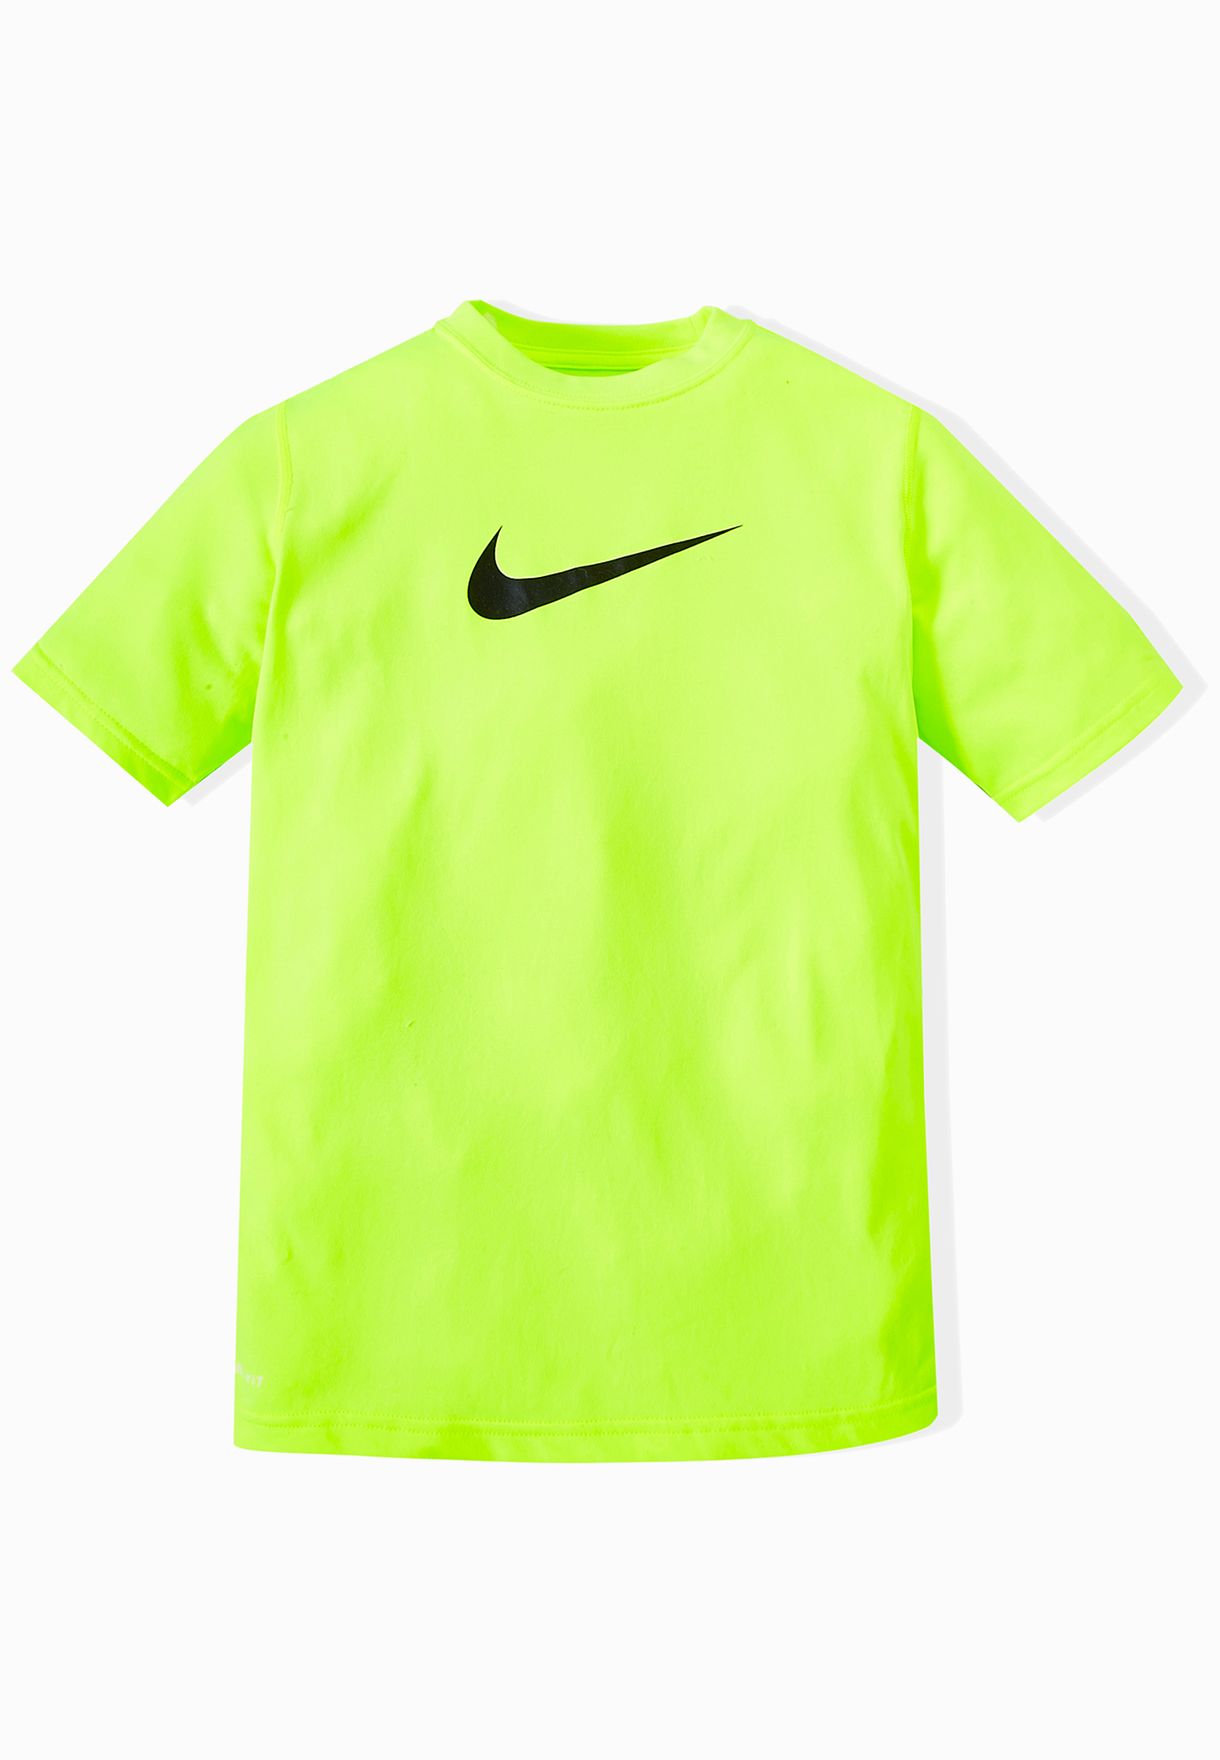 nike light green t shirt